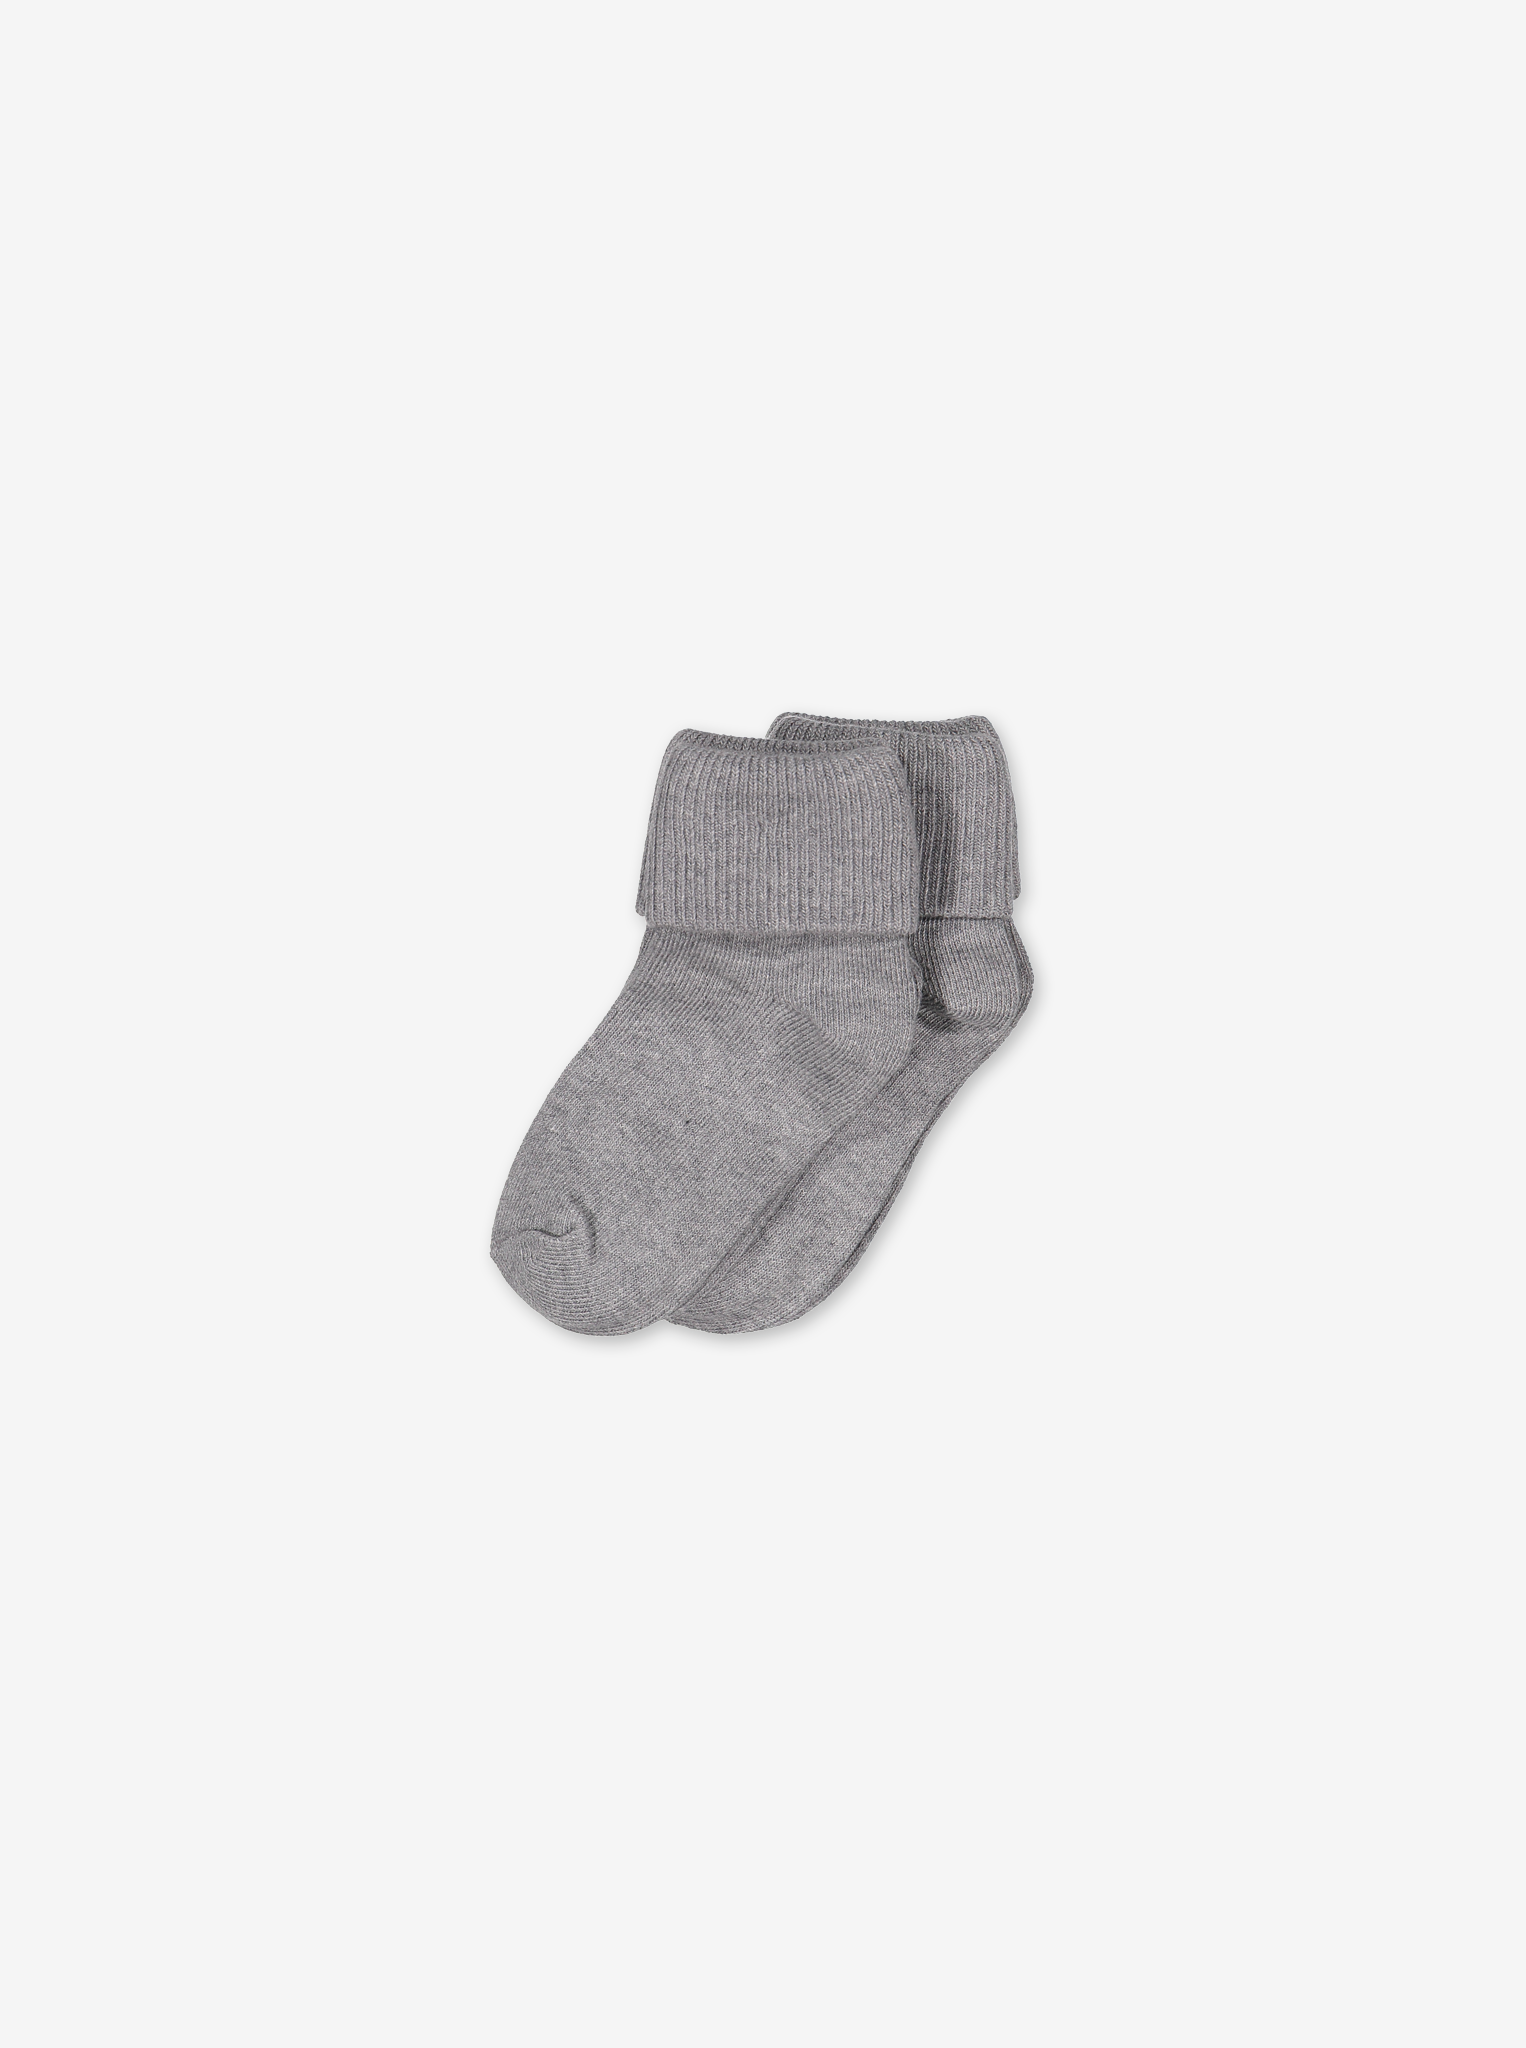 Socks In Pack Of 2 Grey Unisex 0-4m